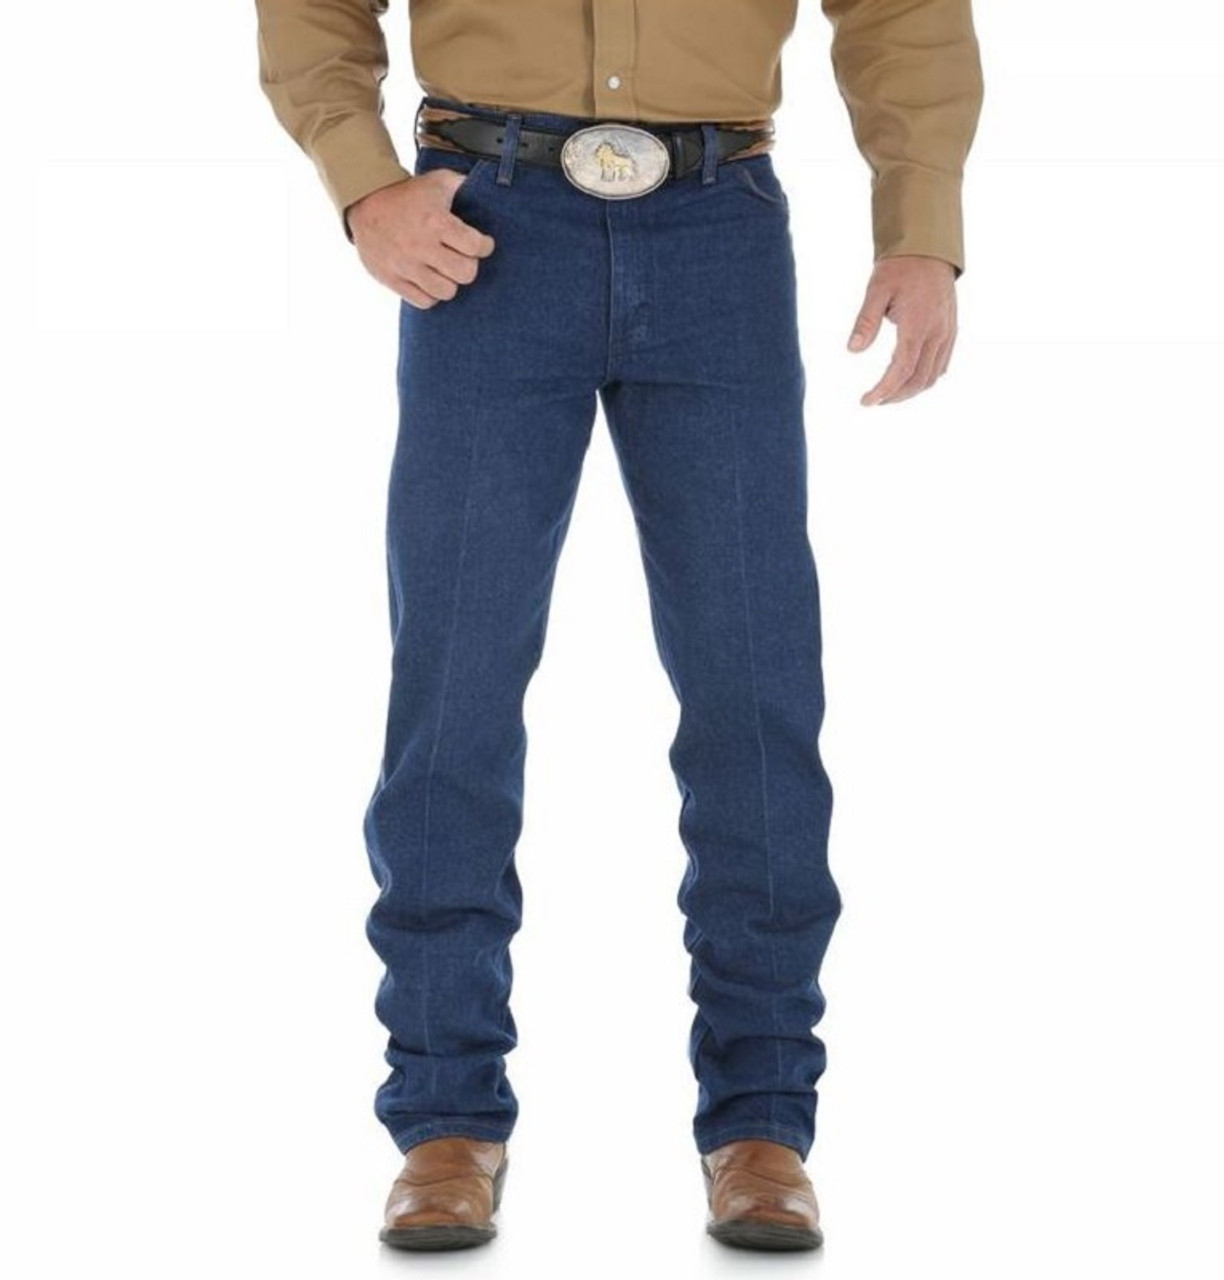 Wrangler Cowboy Cut Original Fit Jeans